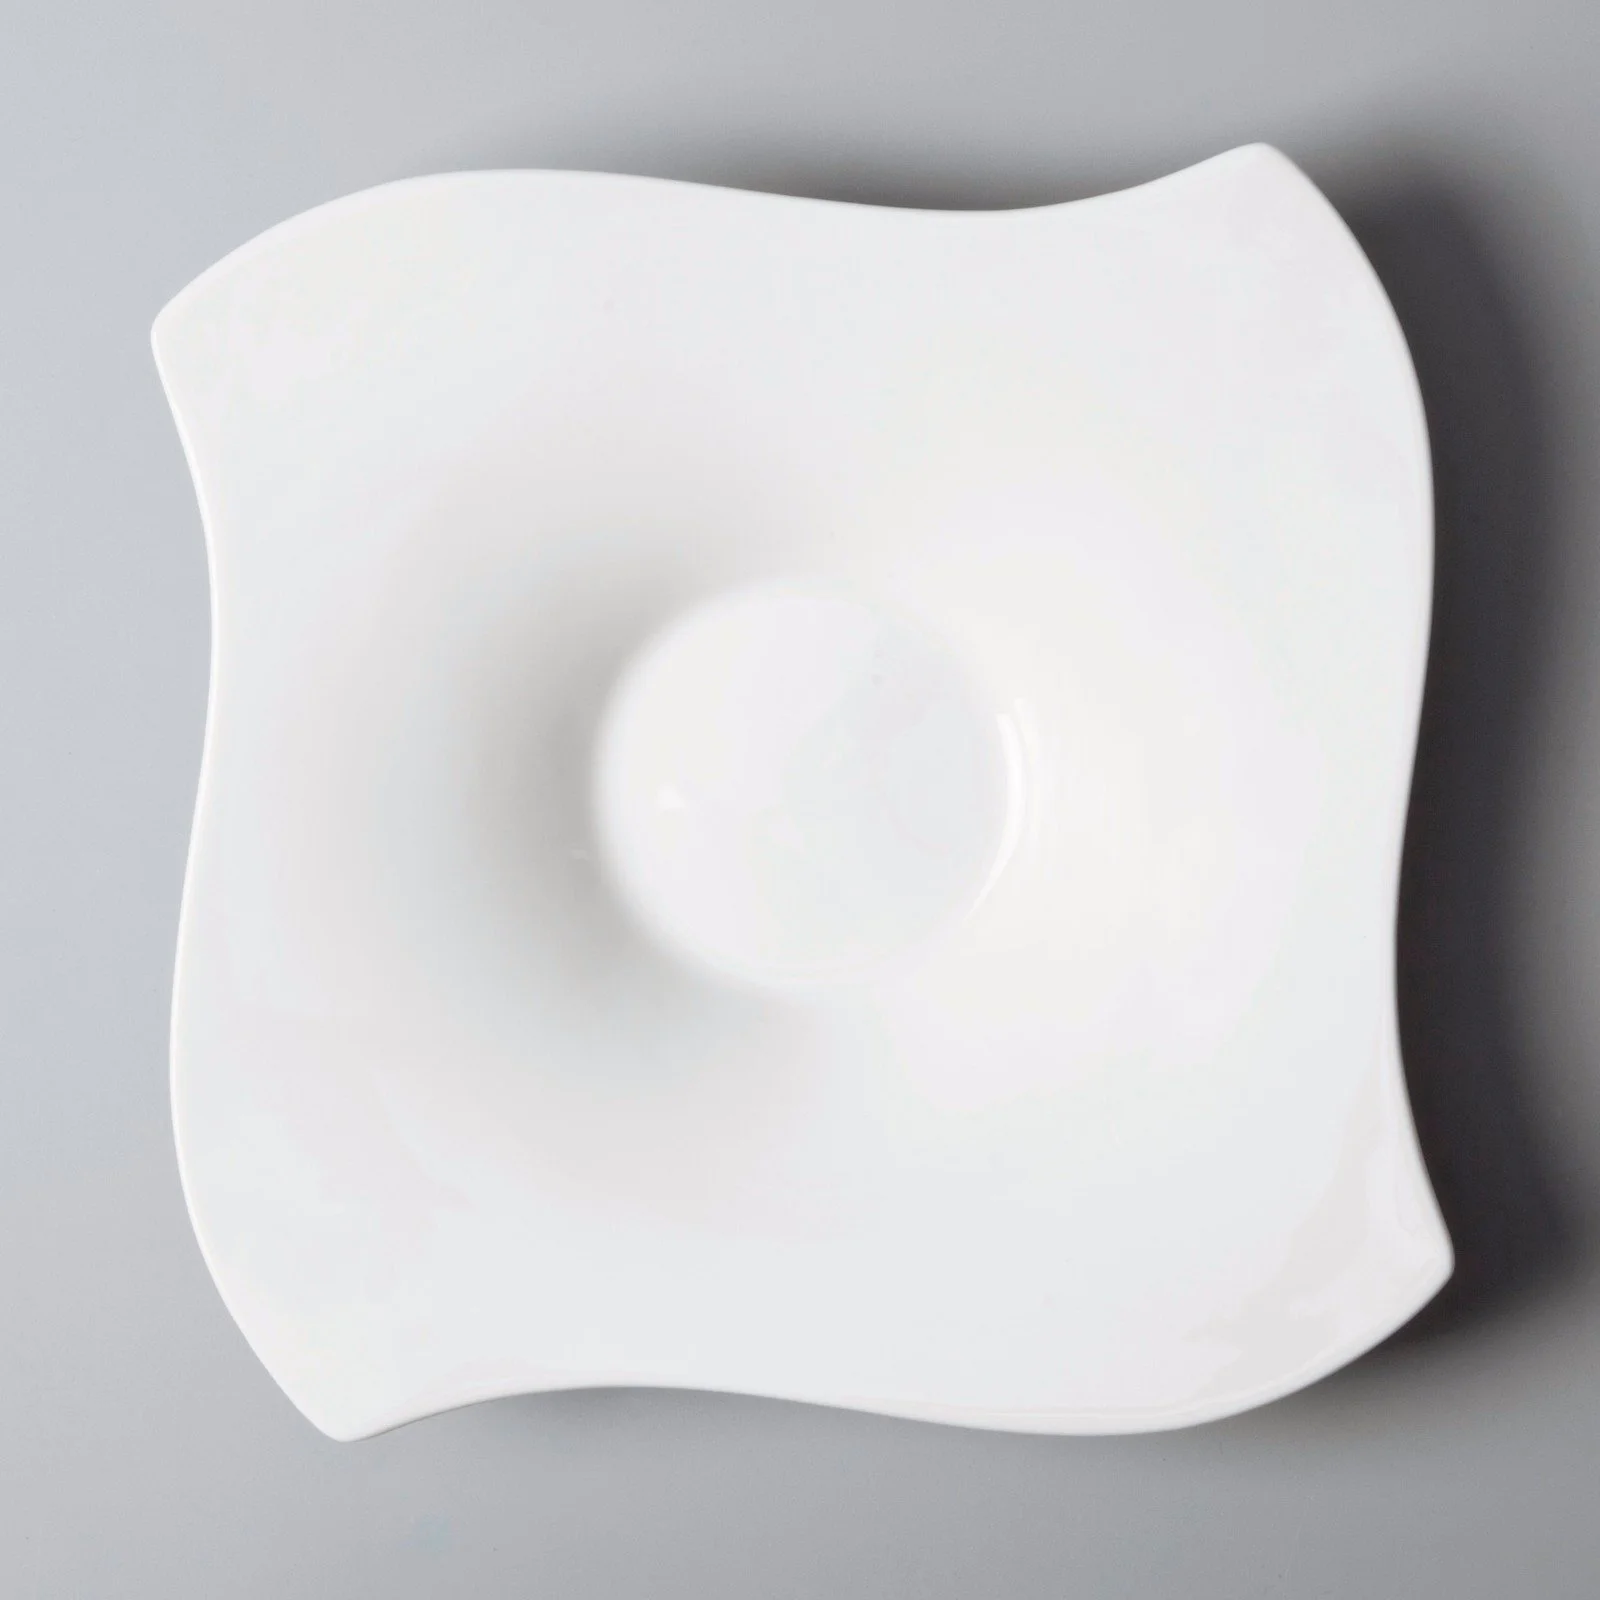 white porcelain tableware porcelain german two eight ceramics wang company